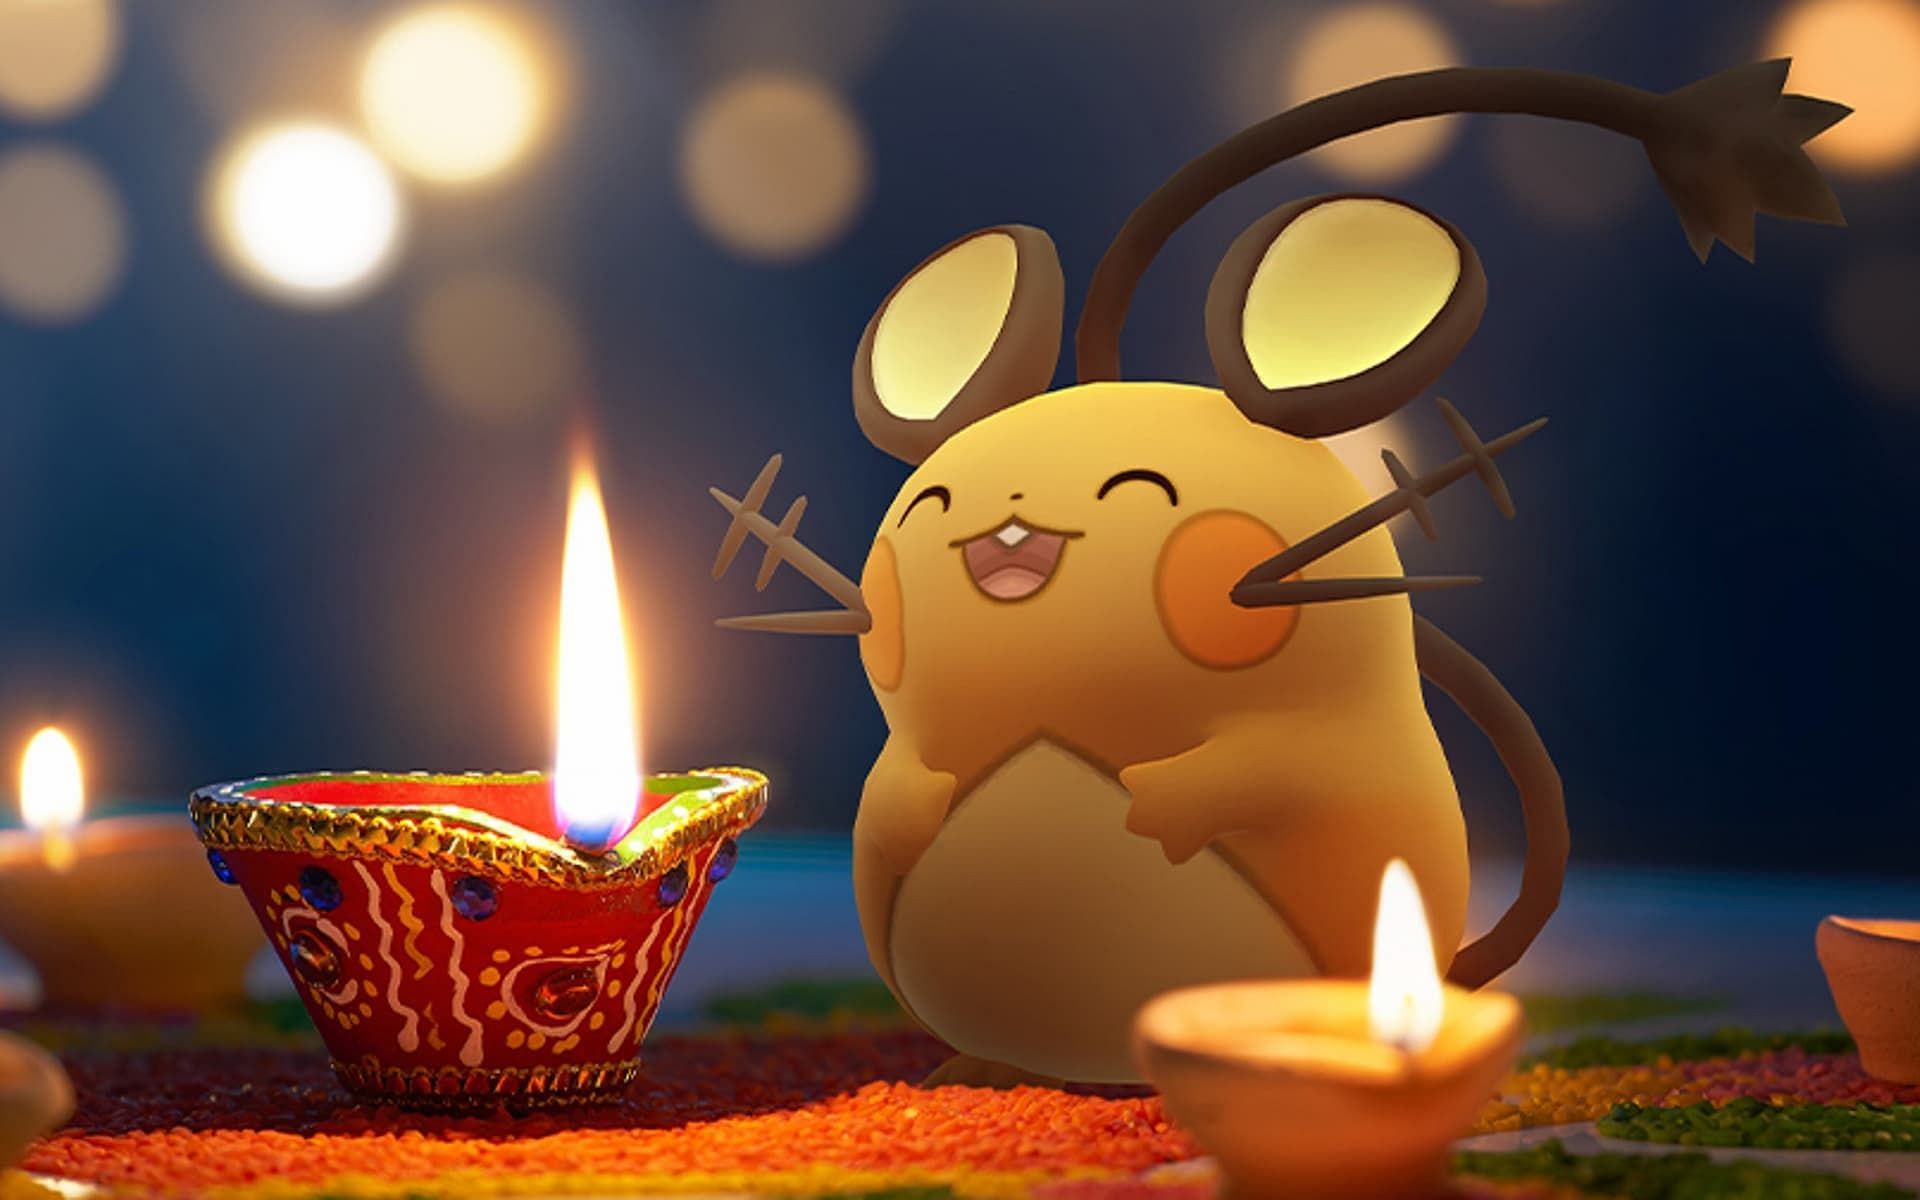 Dedenne in a Pokemon GO promotional image (Image via Niantic)